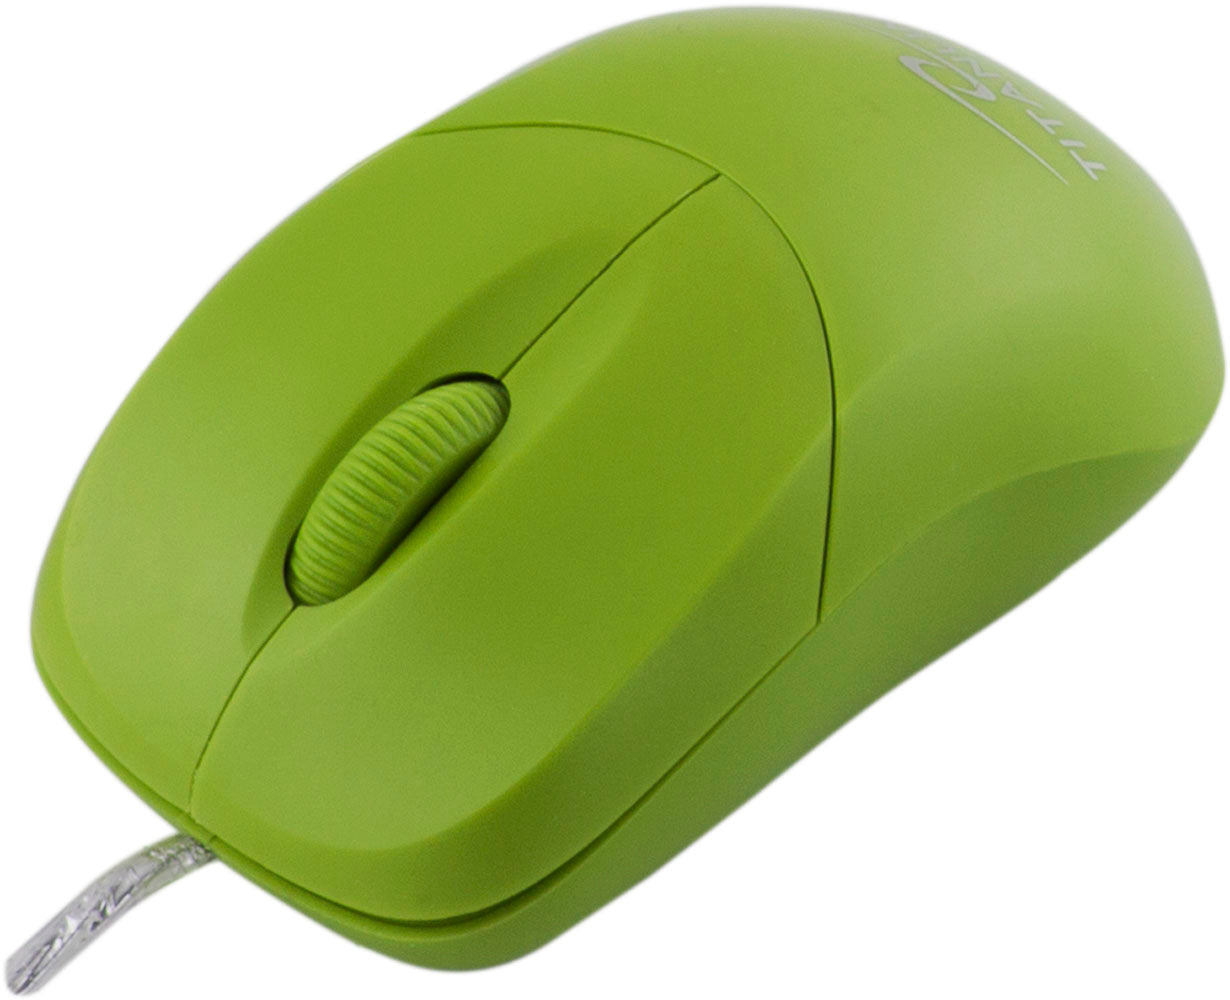 Titanum 3D Arowana Wired Mouse - Green